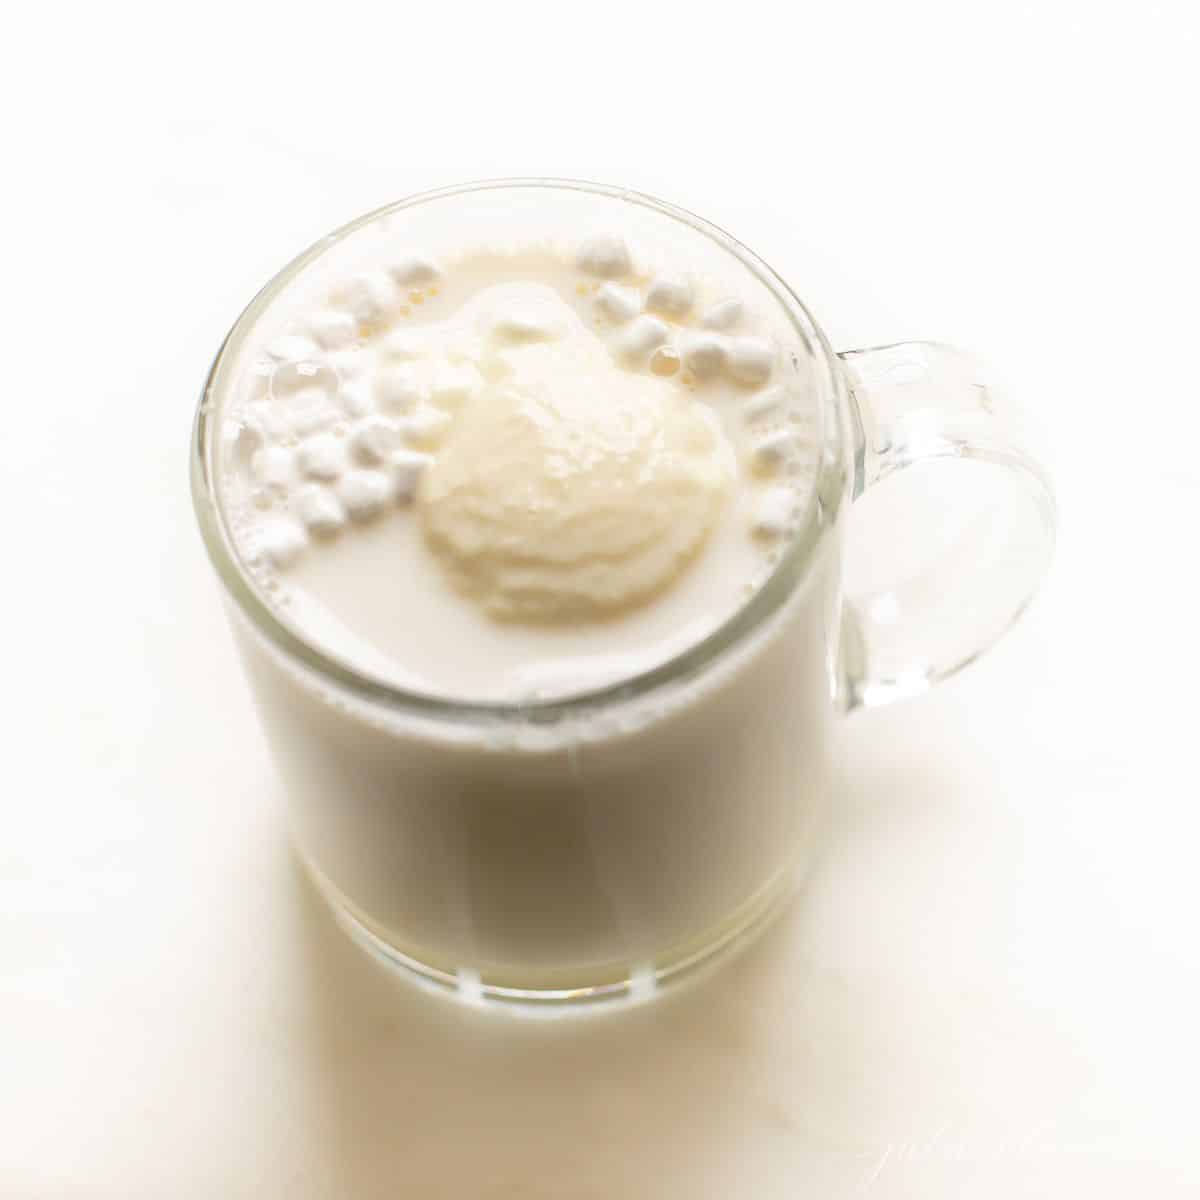 A clear glass mug of white chocolate hot cocoa.